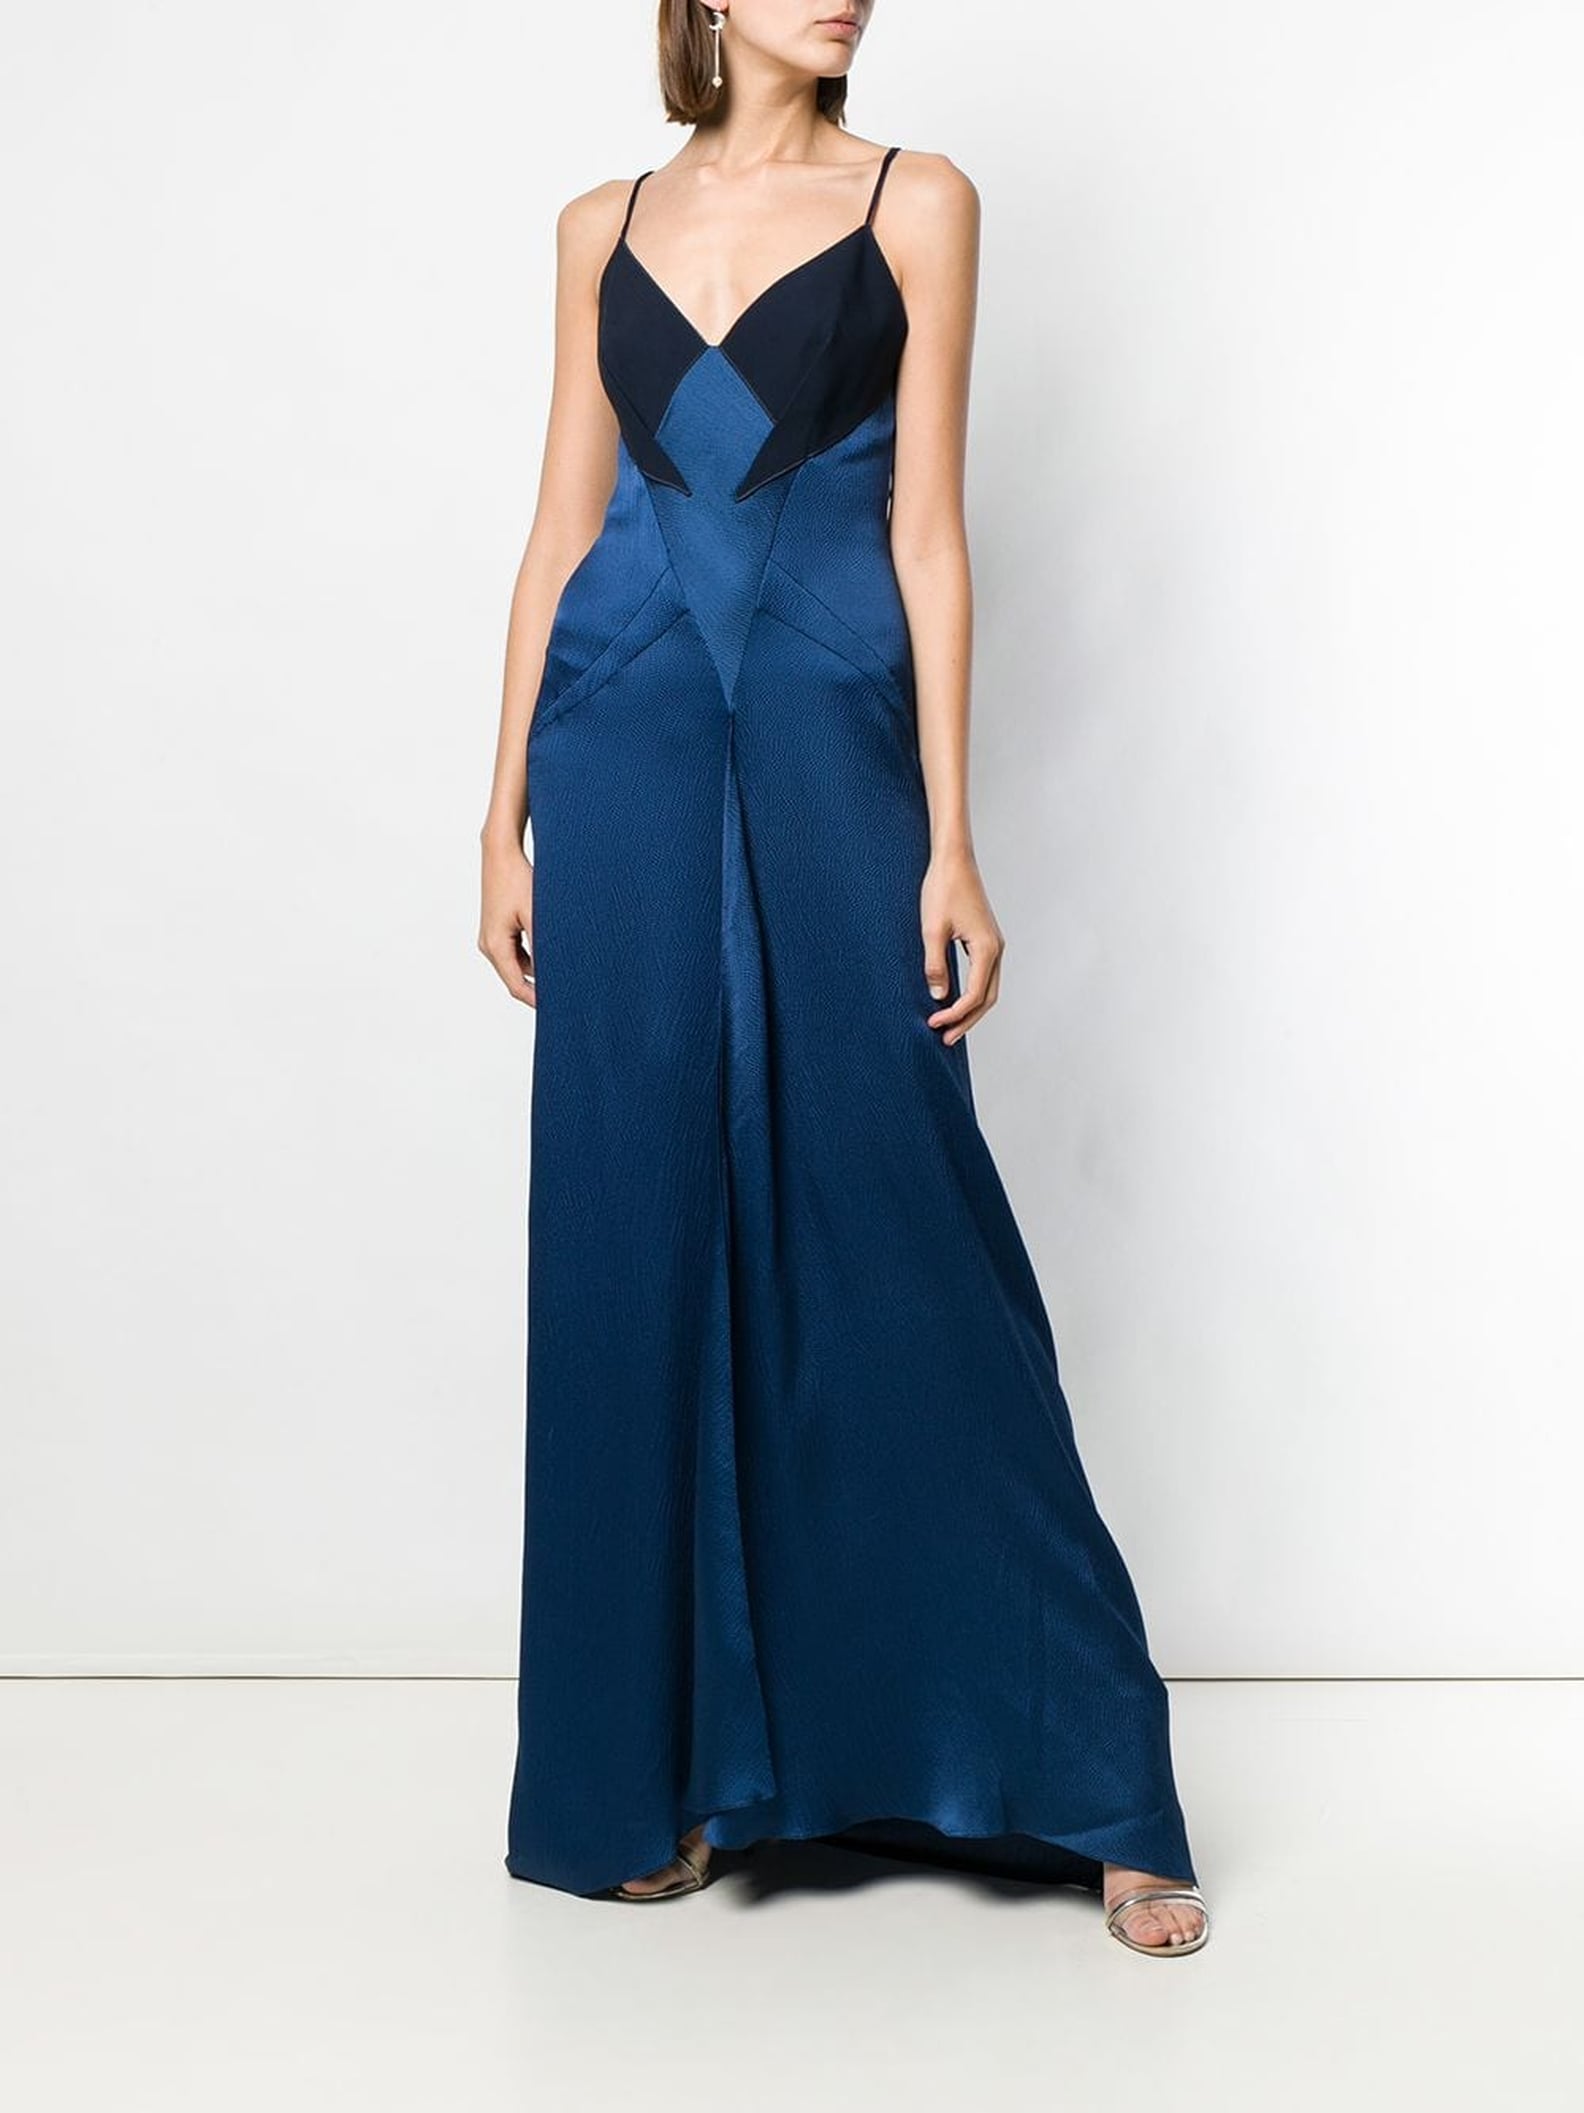 Camila Mendes's Navy Blue Wedding Guest Dress August 2019 | POPSUGAR ...